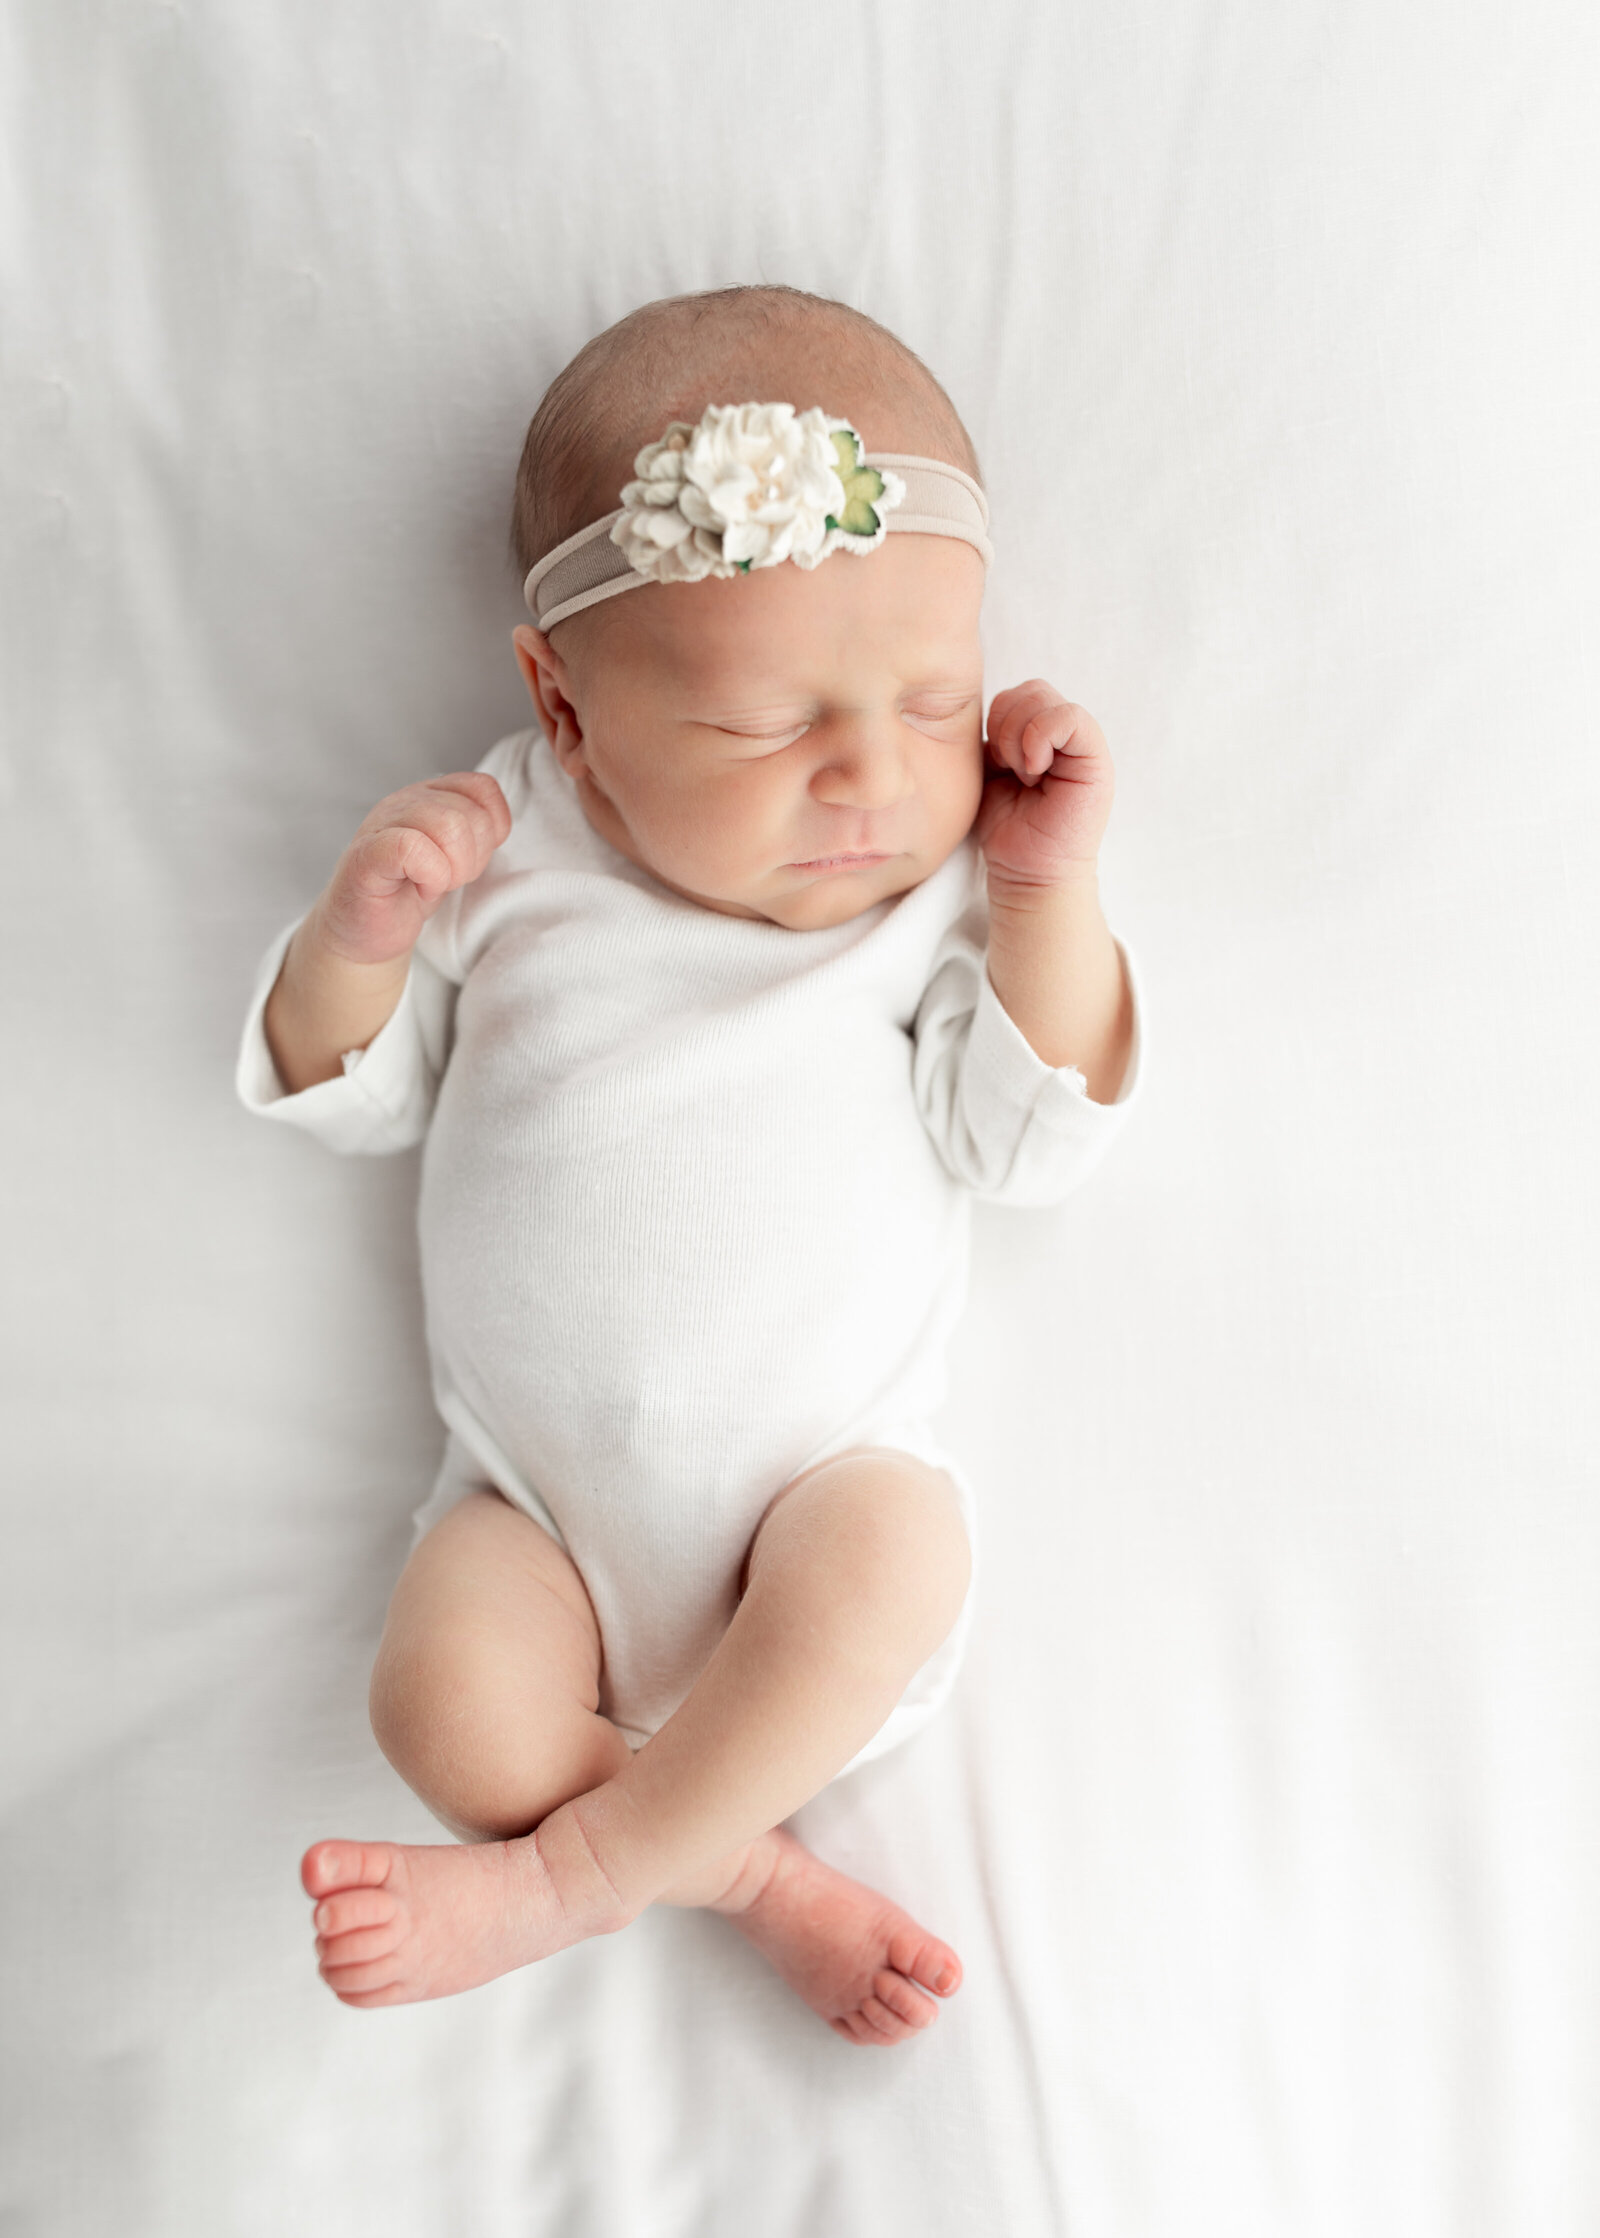 newborn baby girl in posed on white fabric for newborn studio photography